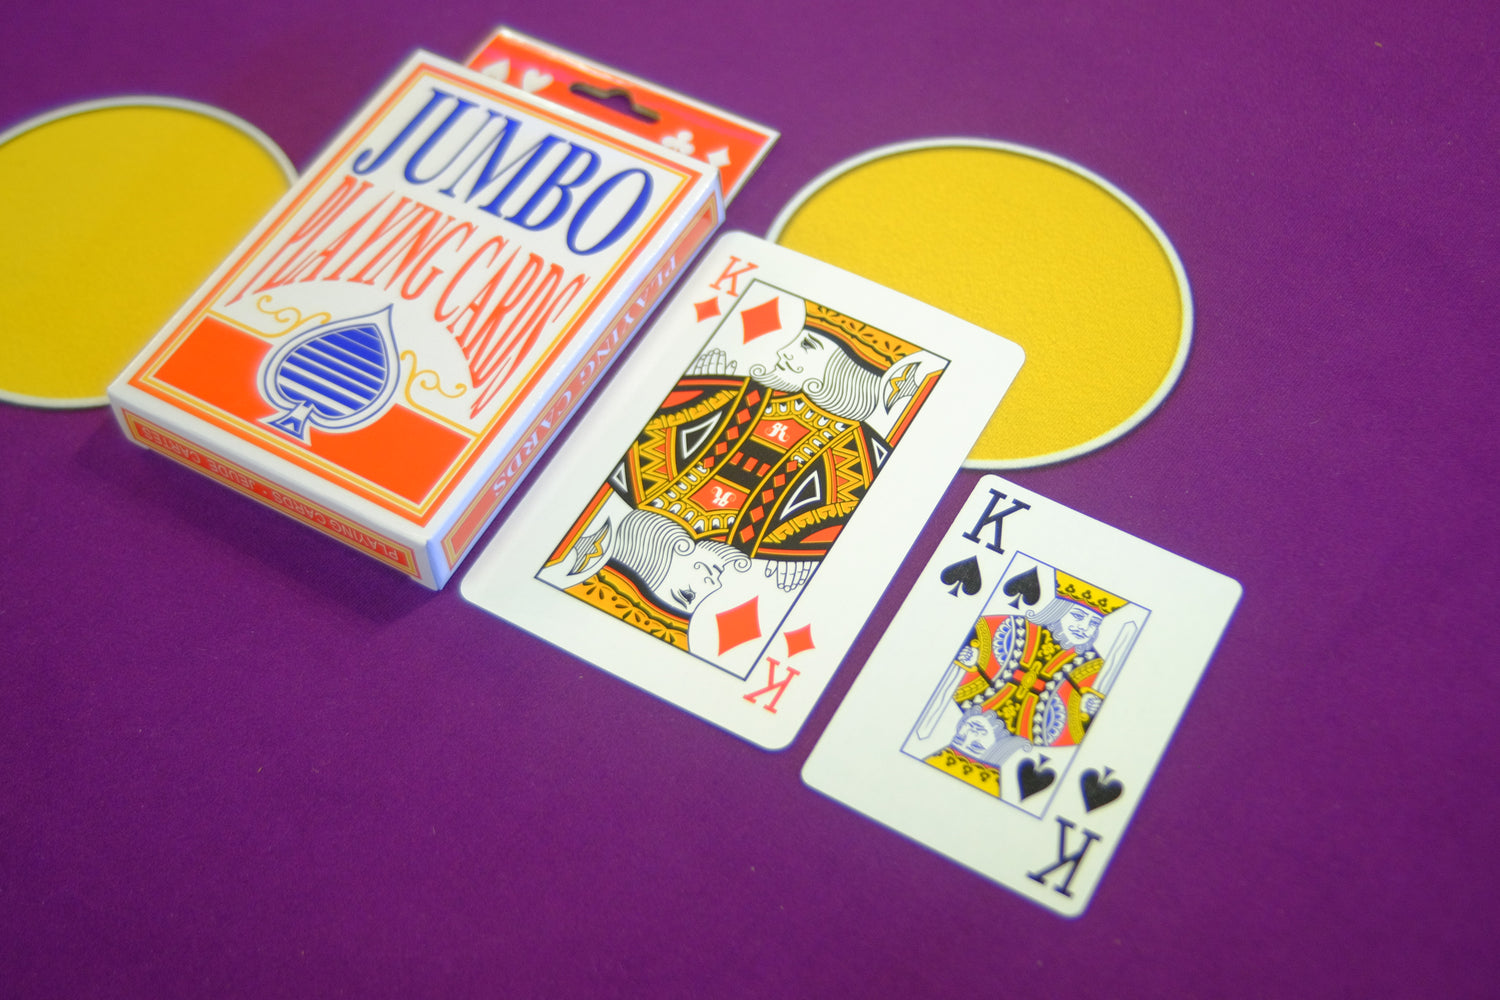 Jumbo Large Playing Cards